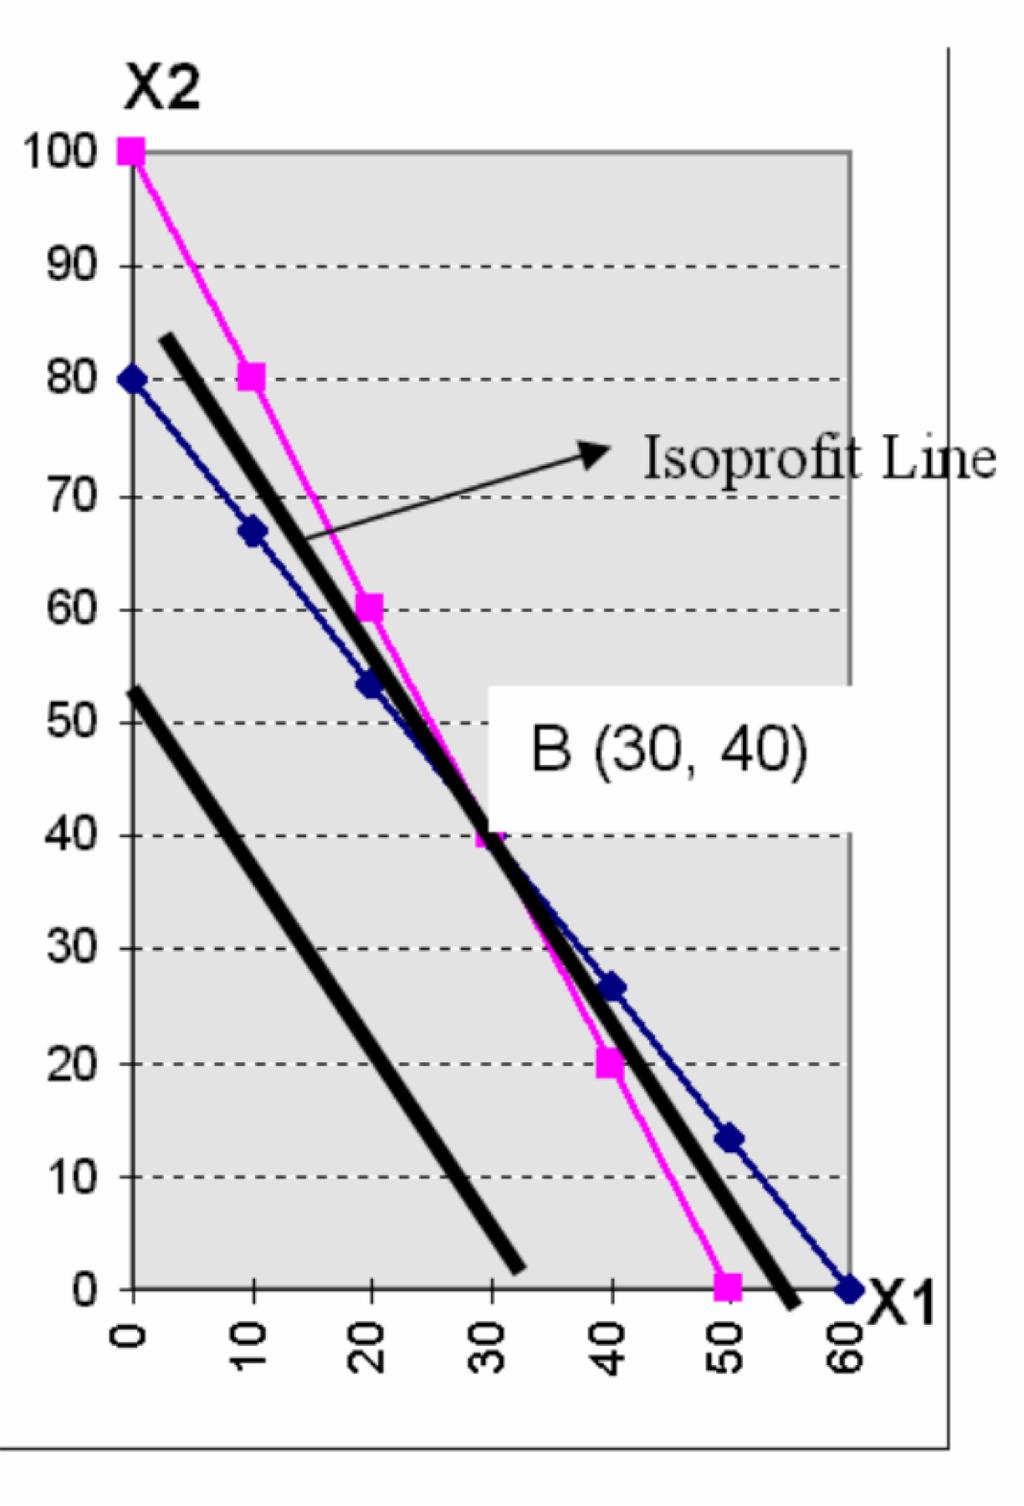 Iso Profit Line Penyelesaian dengan menggunakan titik sudut (corner point) artinya kita harus mencari nilai tertinggi dari titik-titik yang berada pada area layak (feasible region).